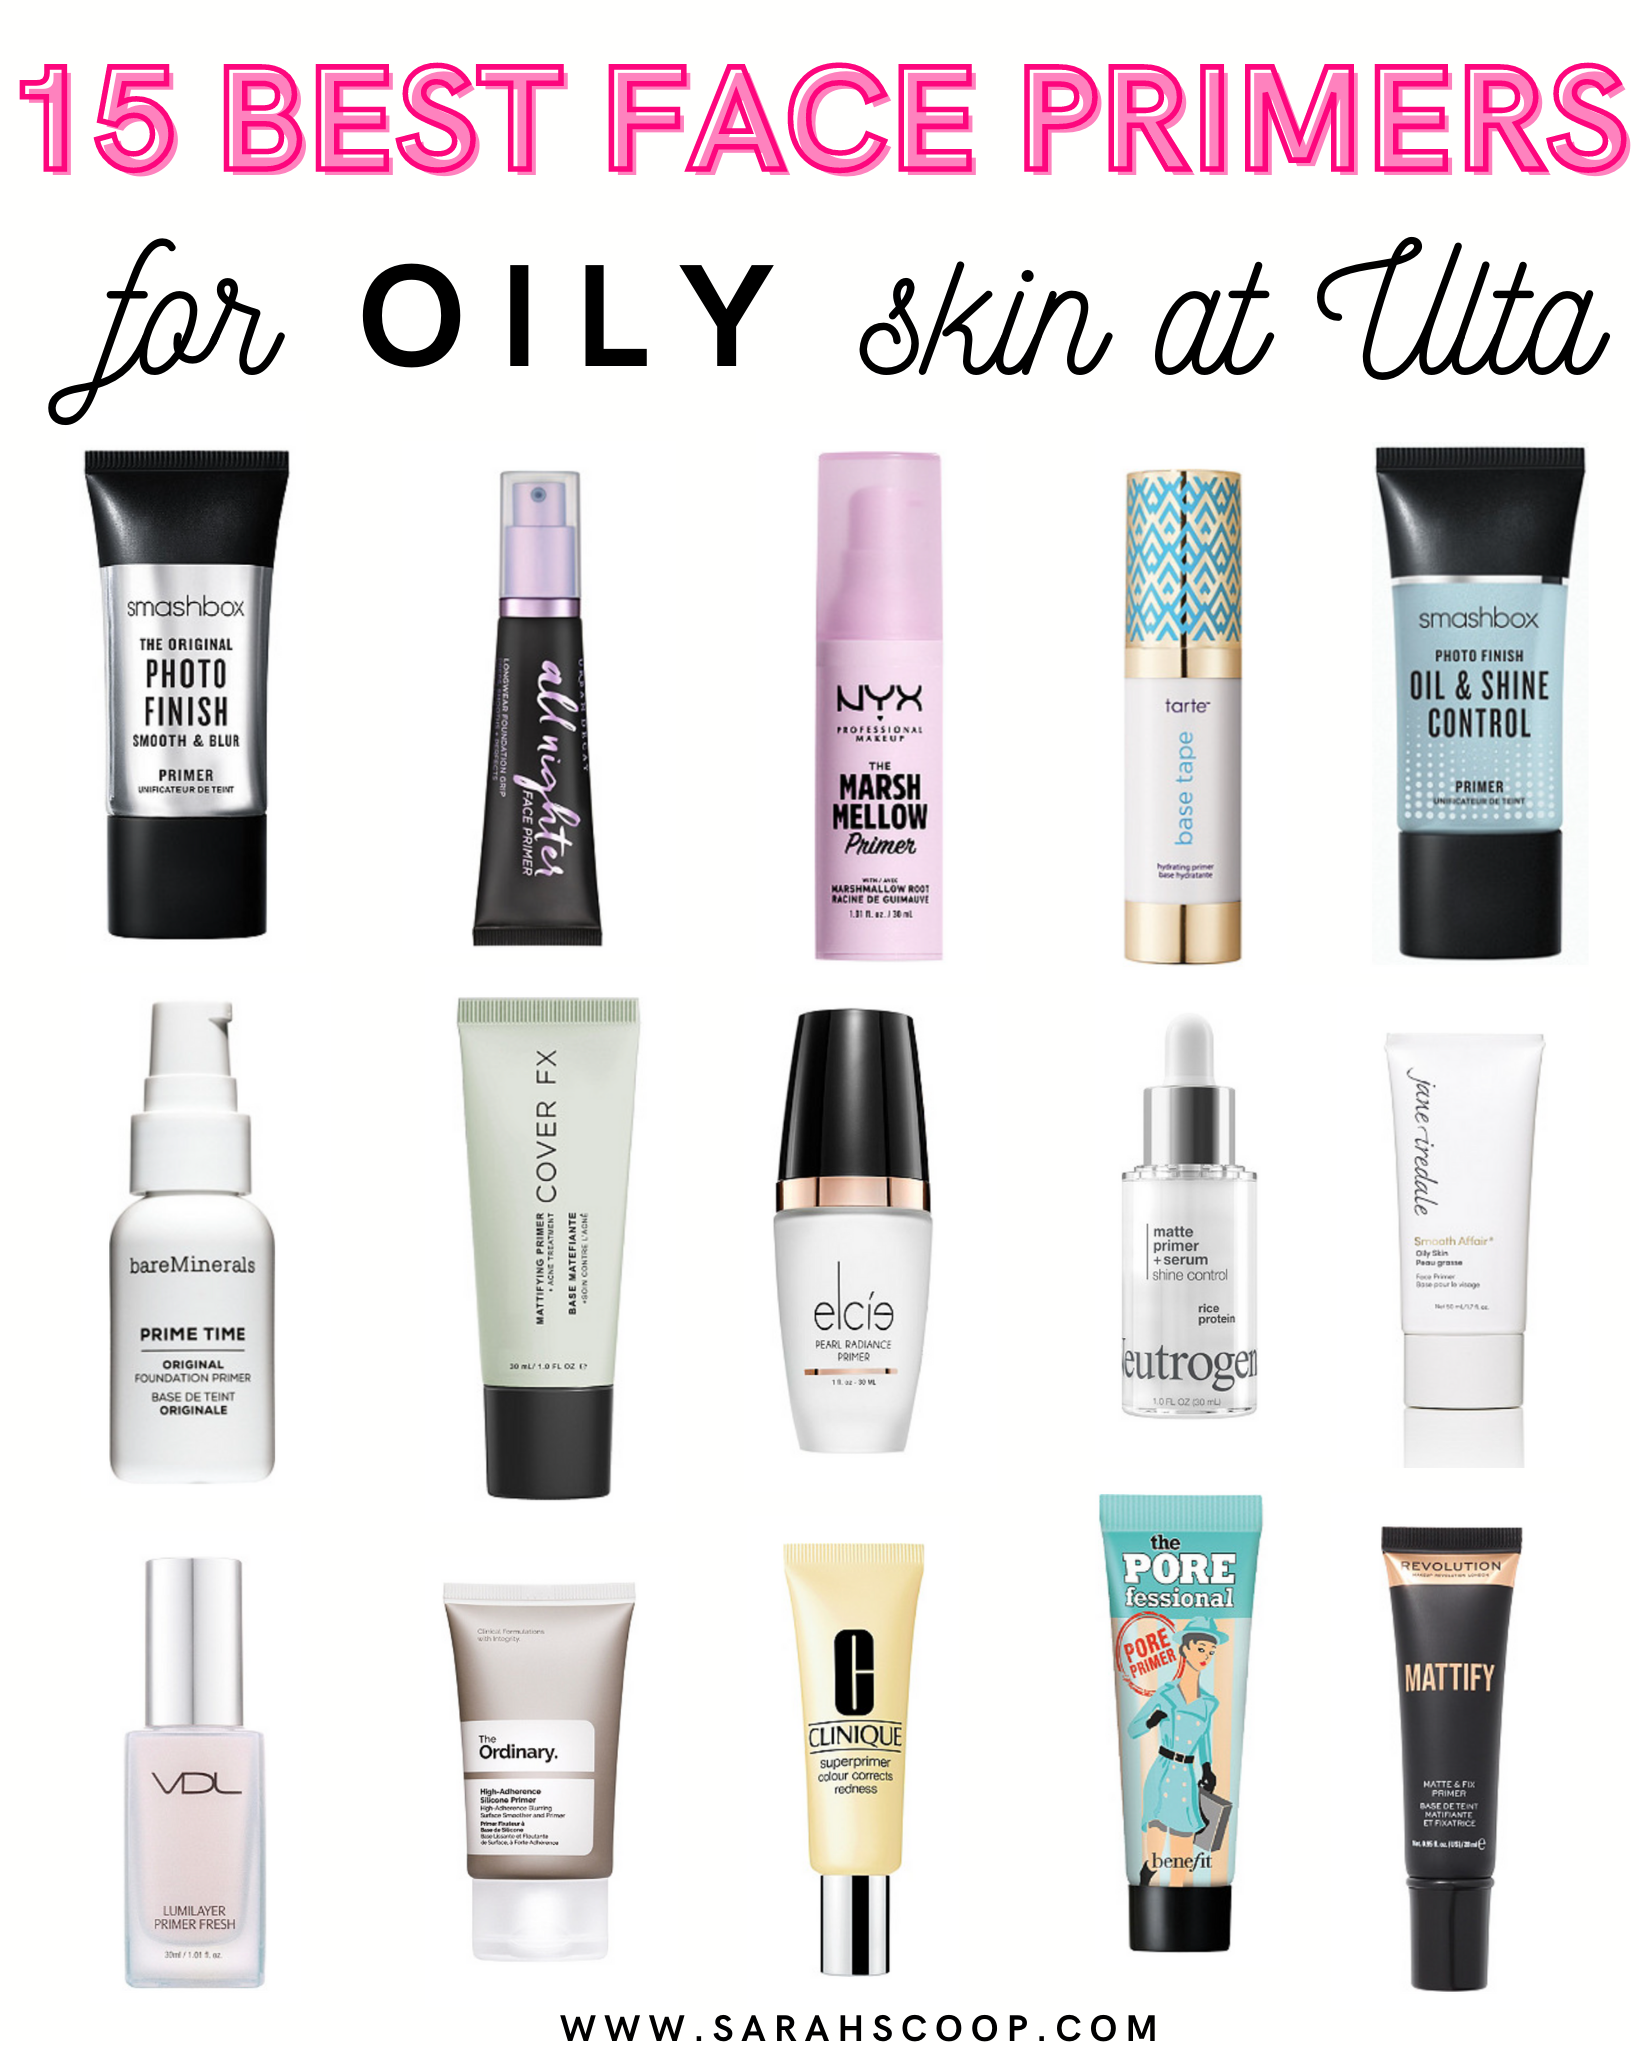 15 Best Primers For Oily Skin At Ulta | Sarah